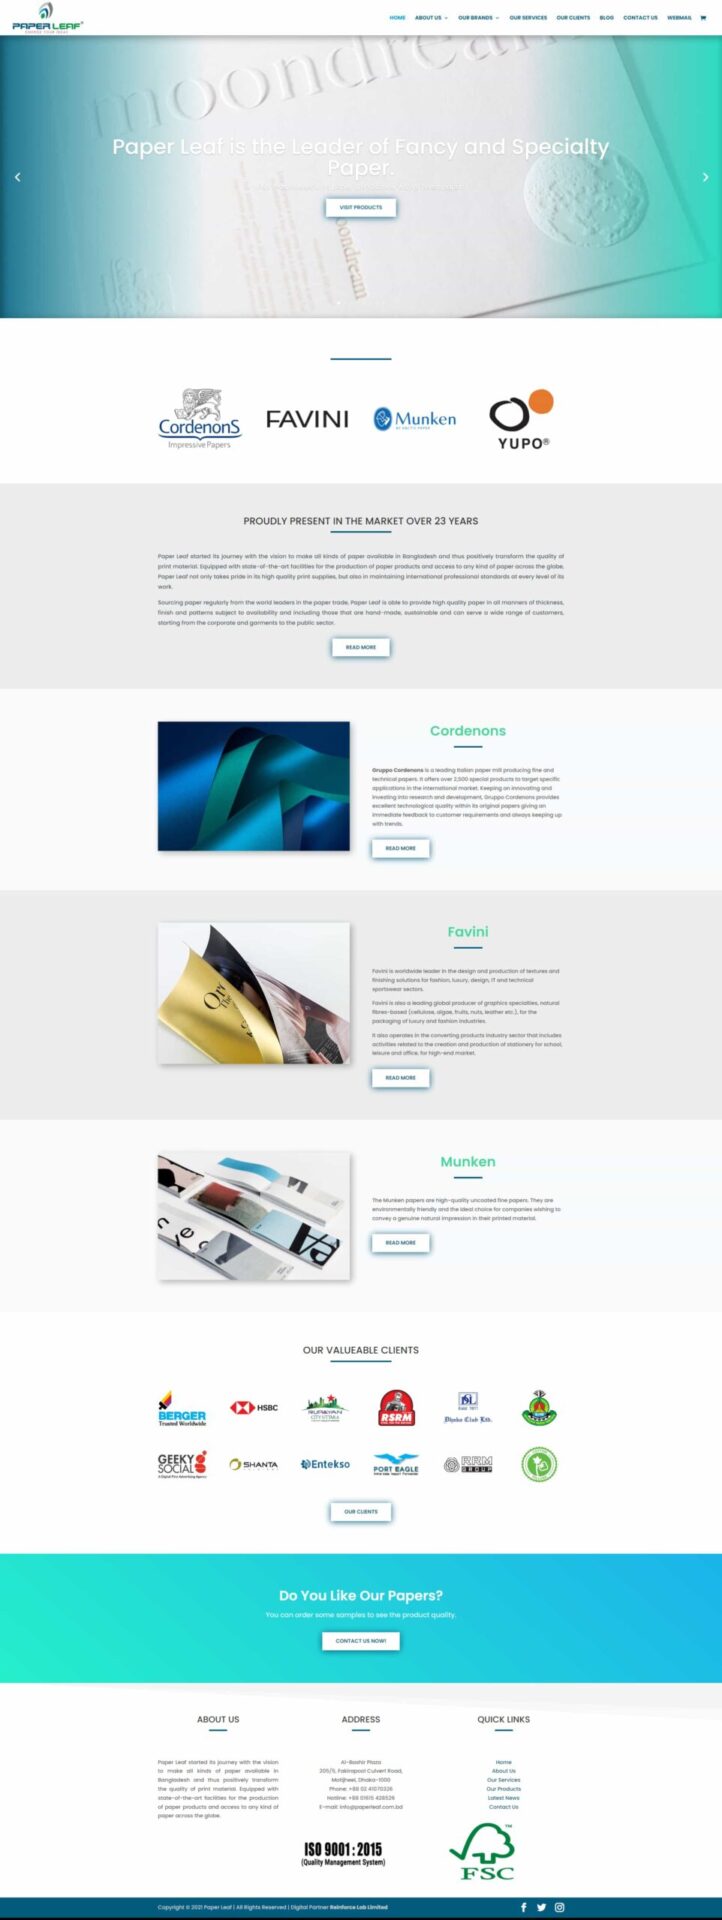 Paper Leaf Company Website Project Abu Sayed